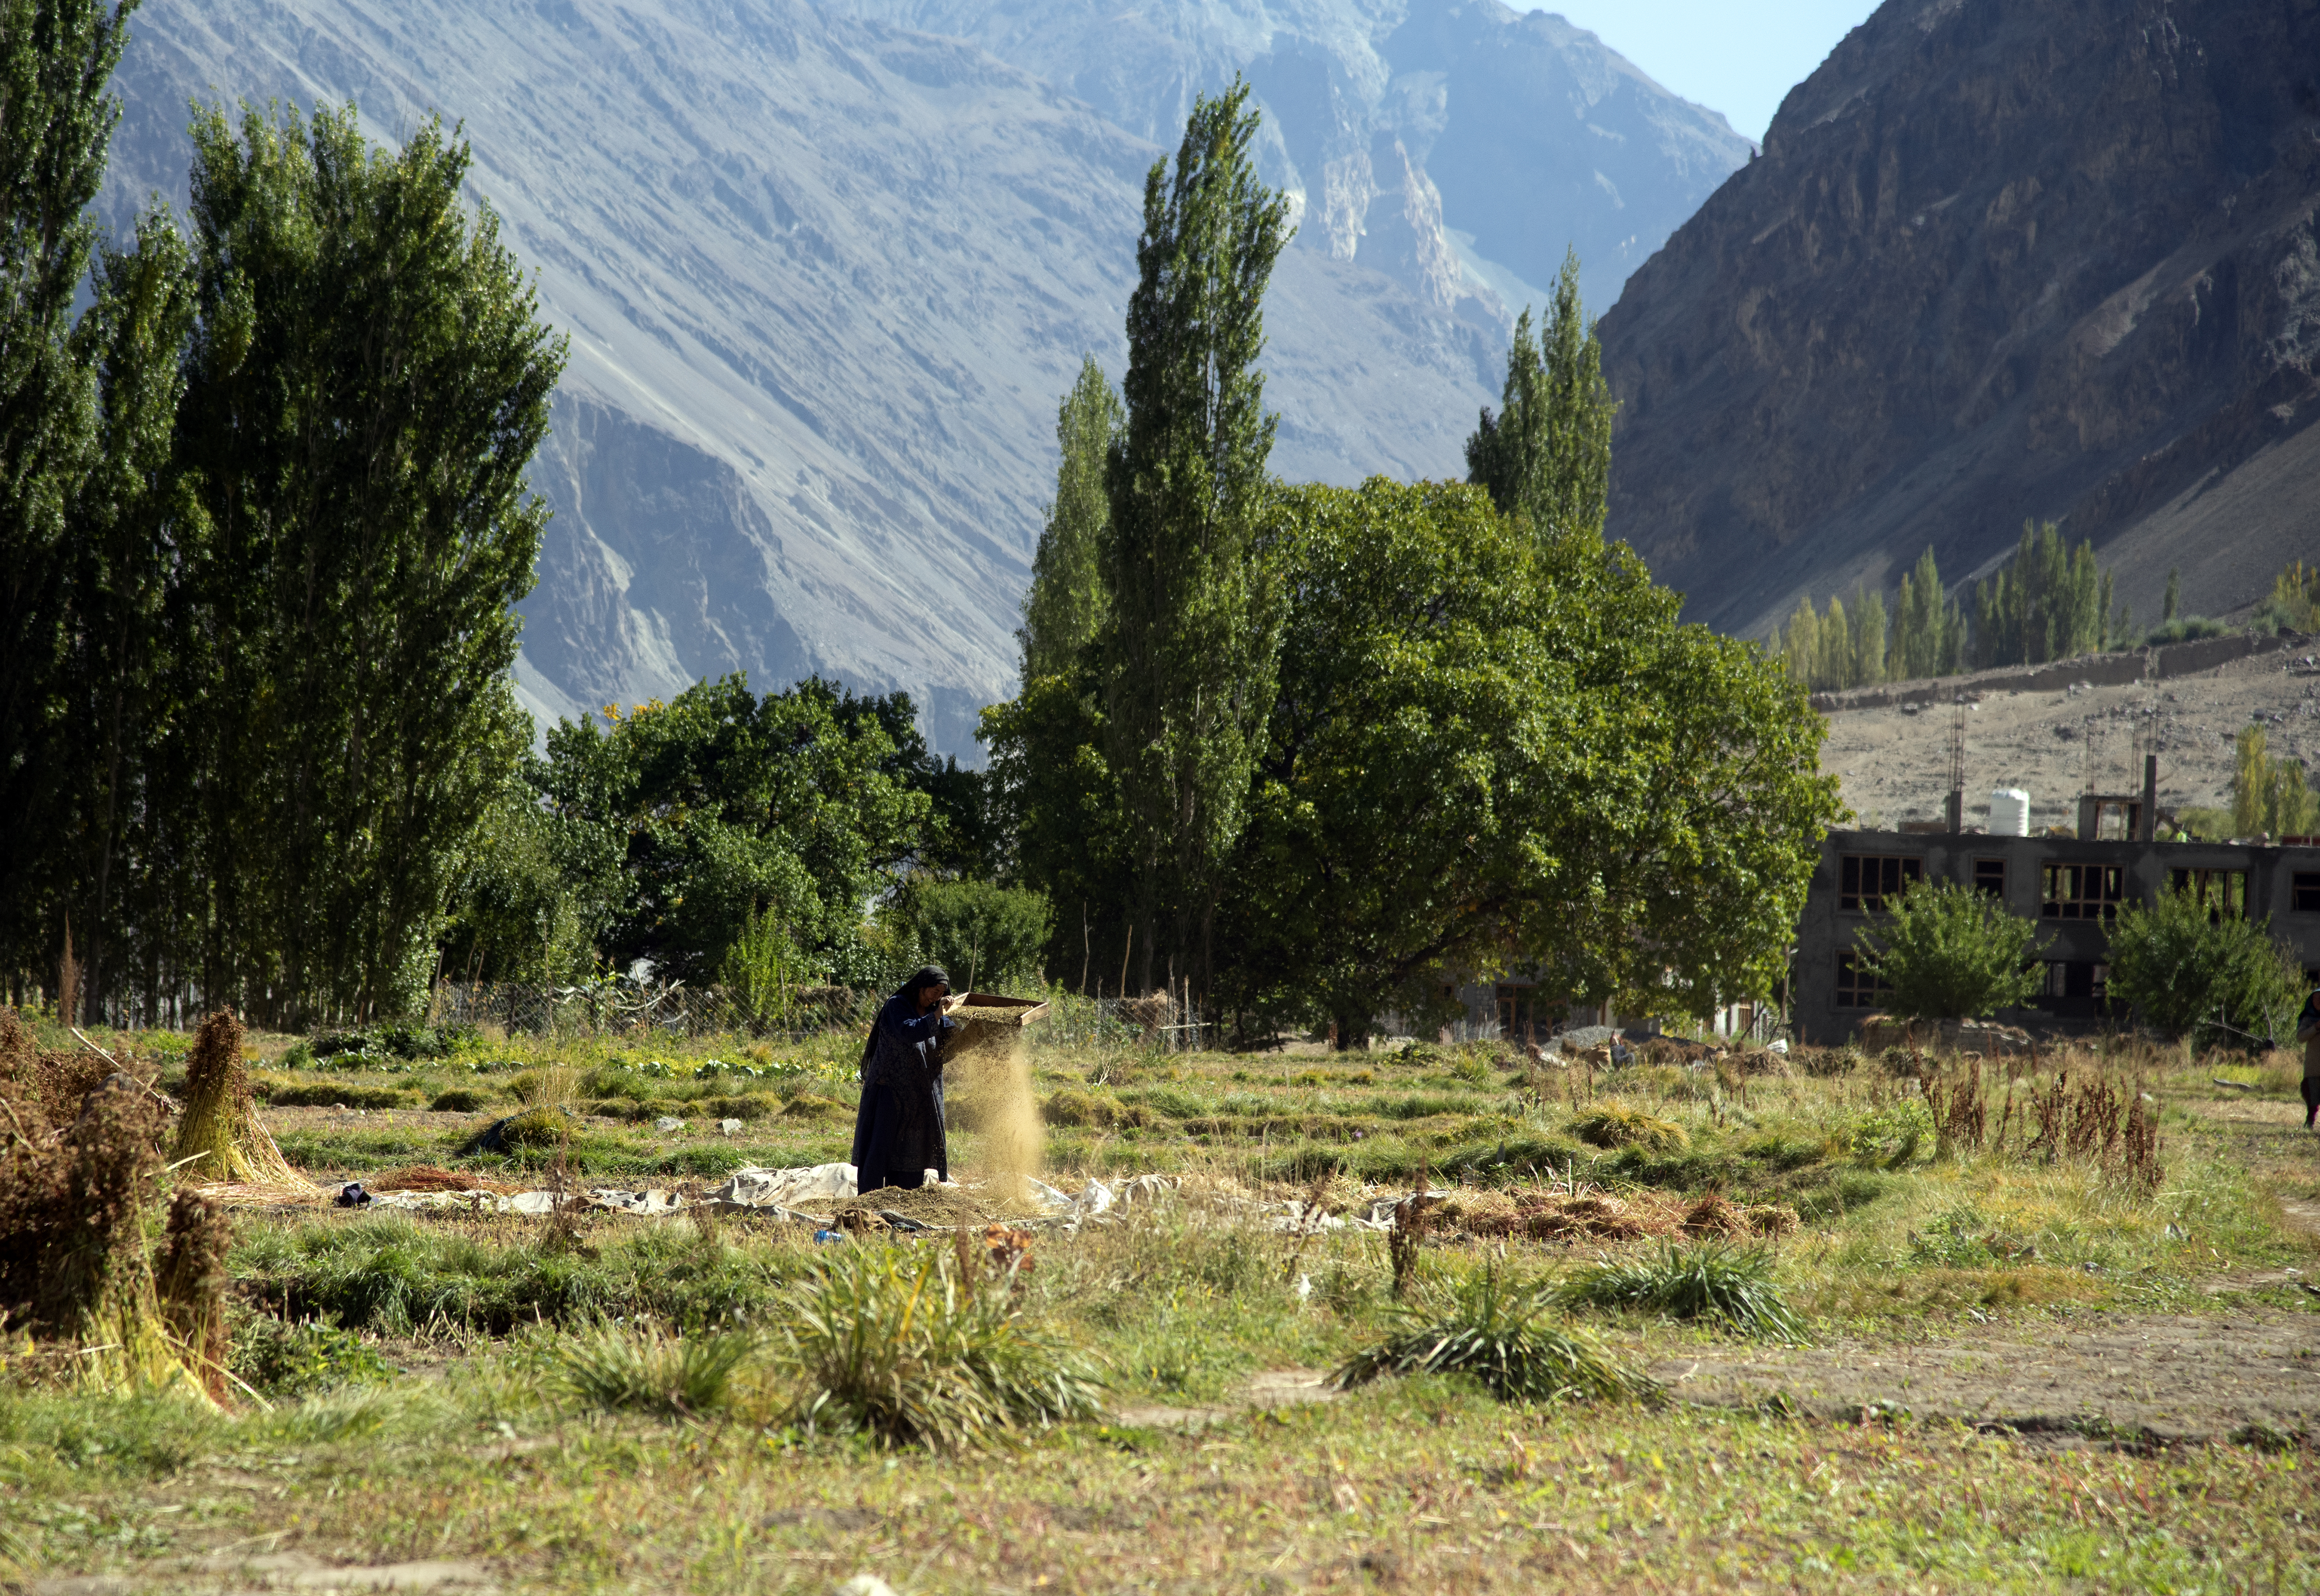 A woman in fields against a mountain backdrop (image: Sugato Mukherjee)